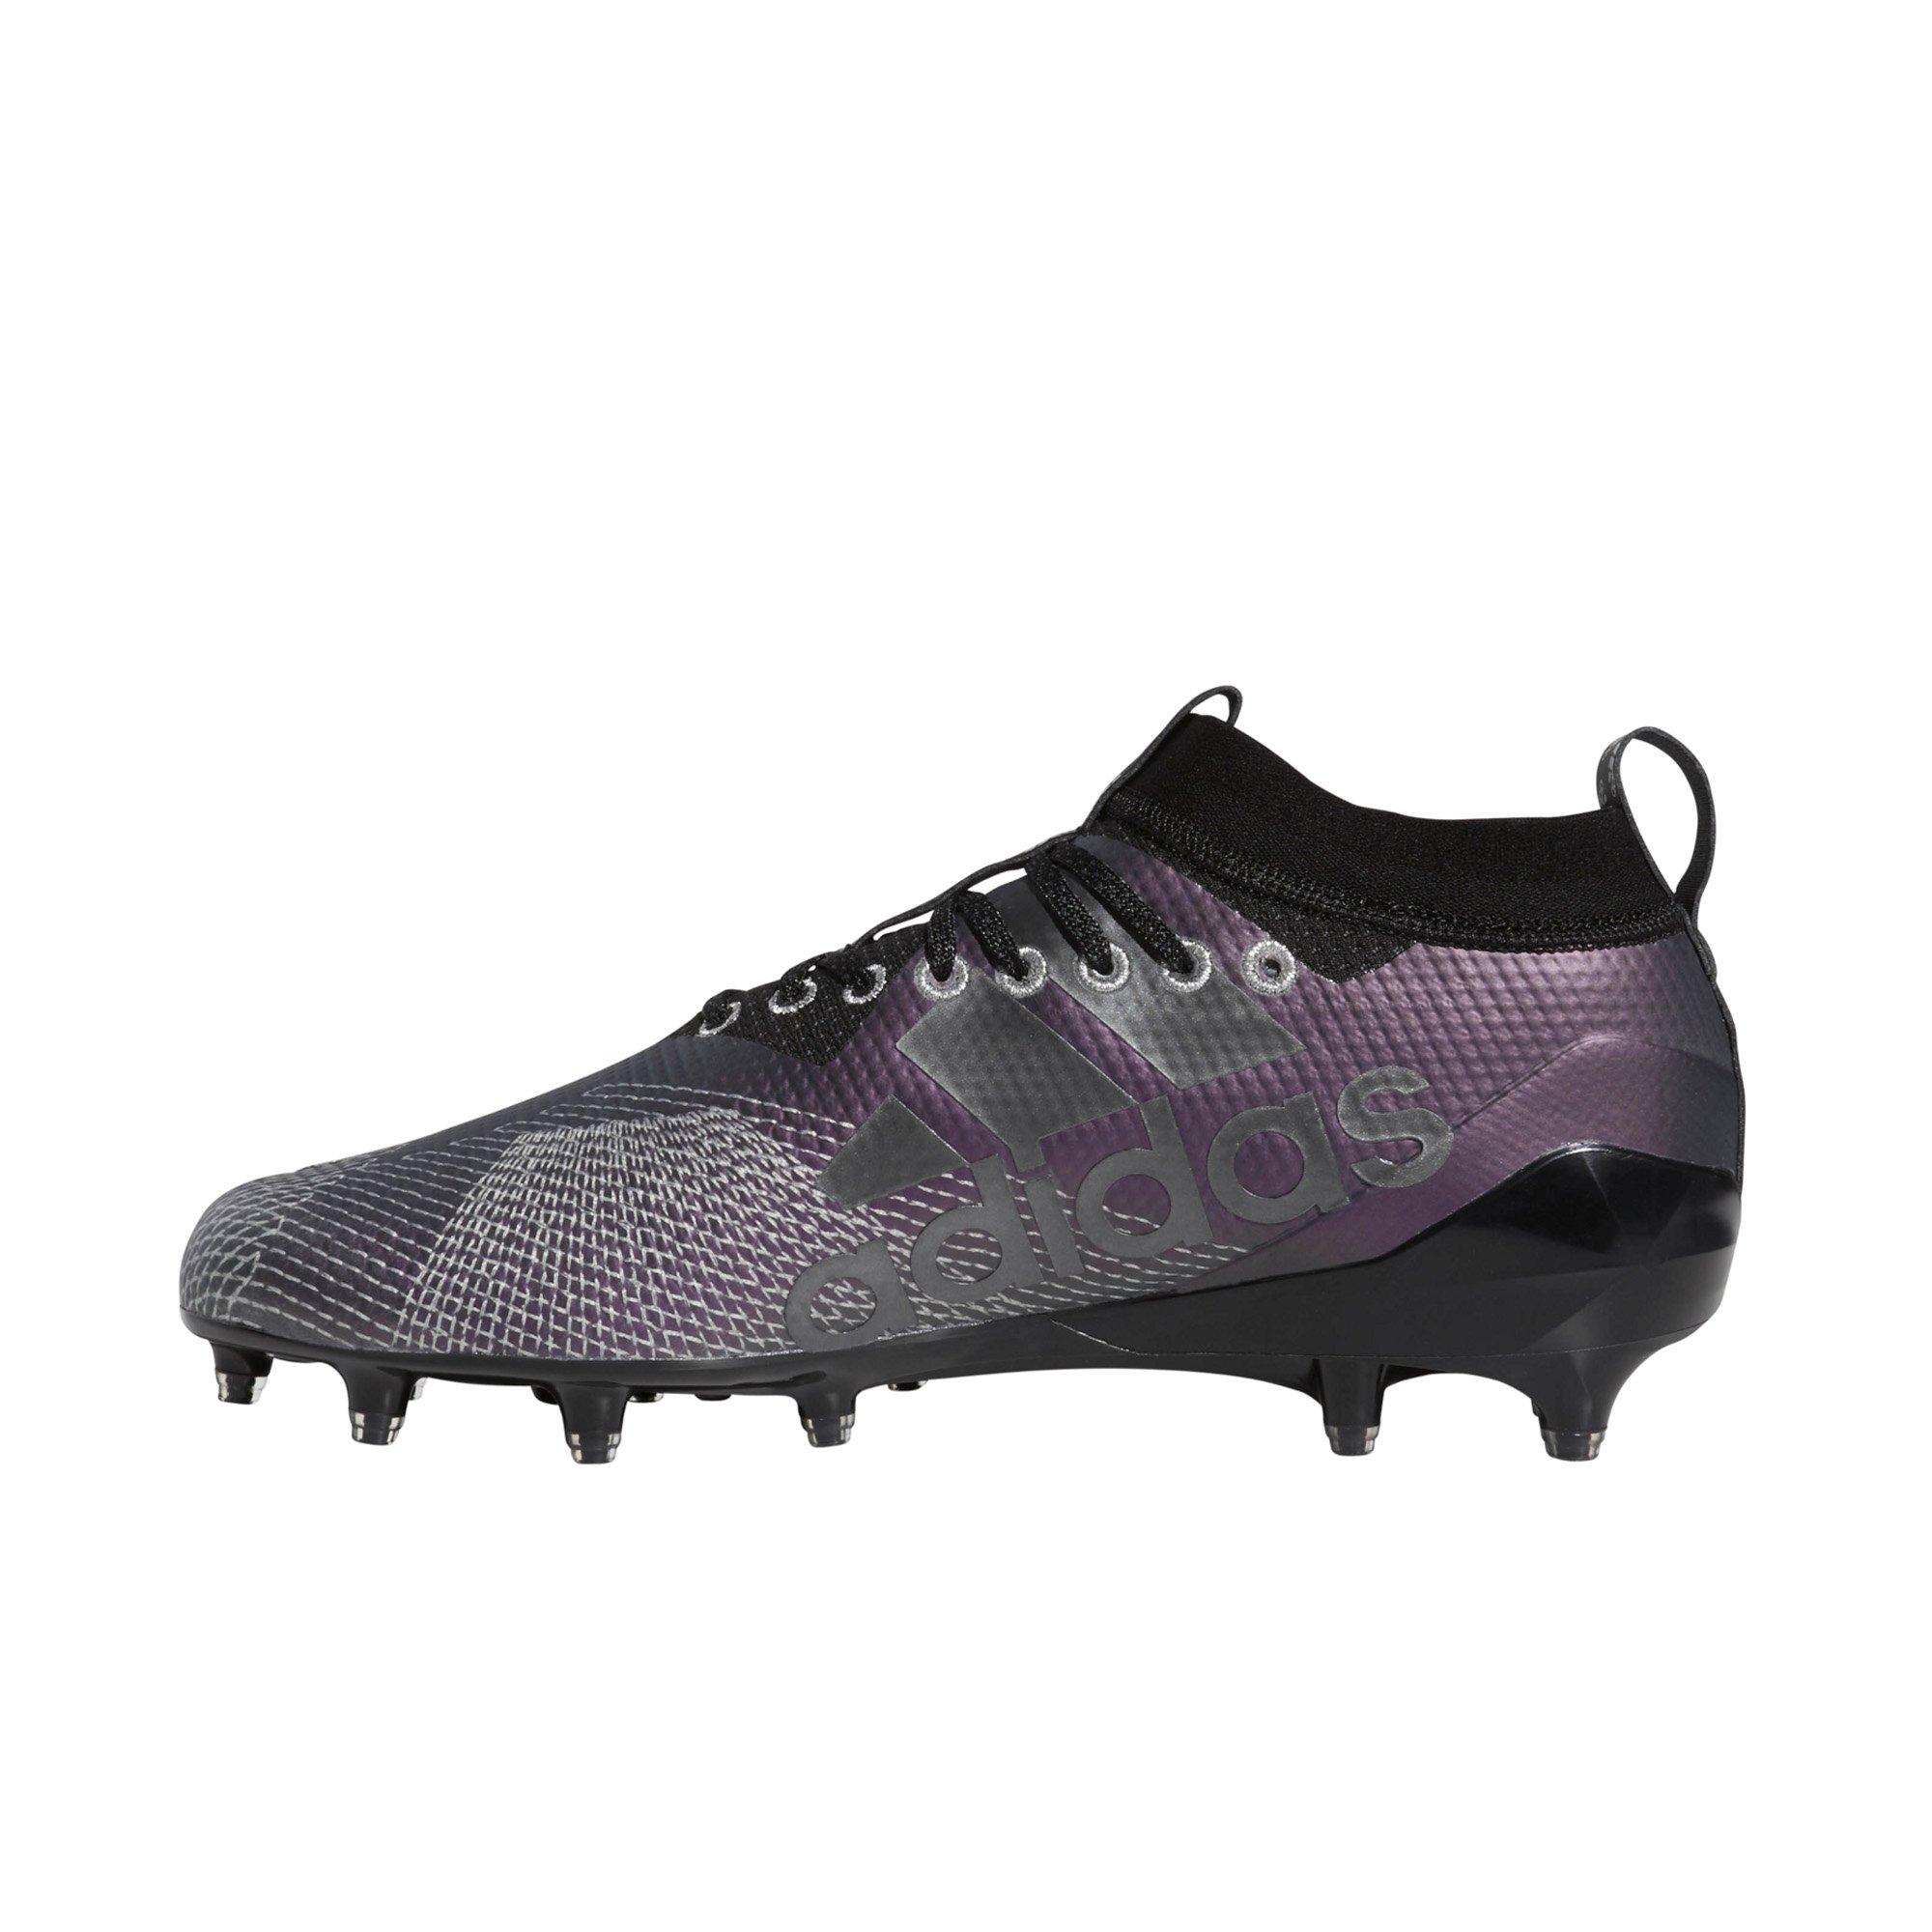 adidas adizero football shoes